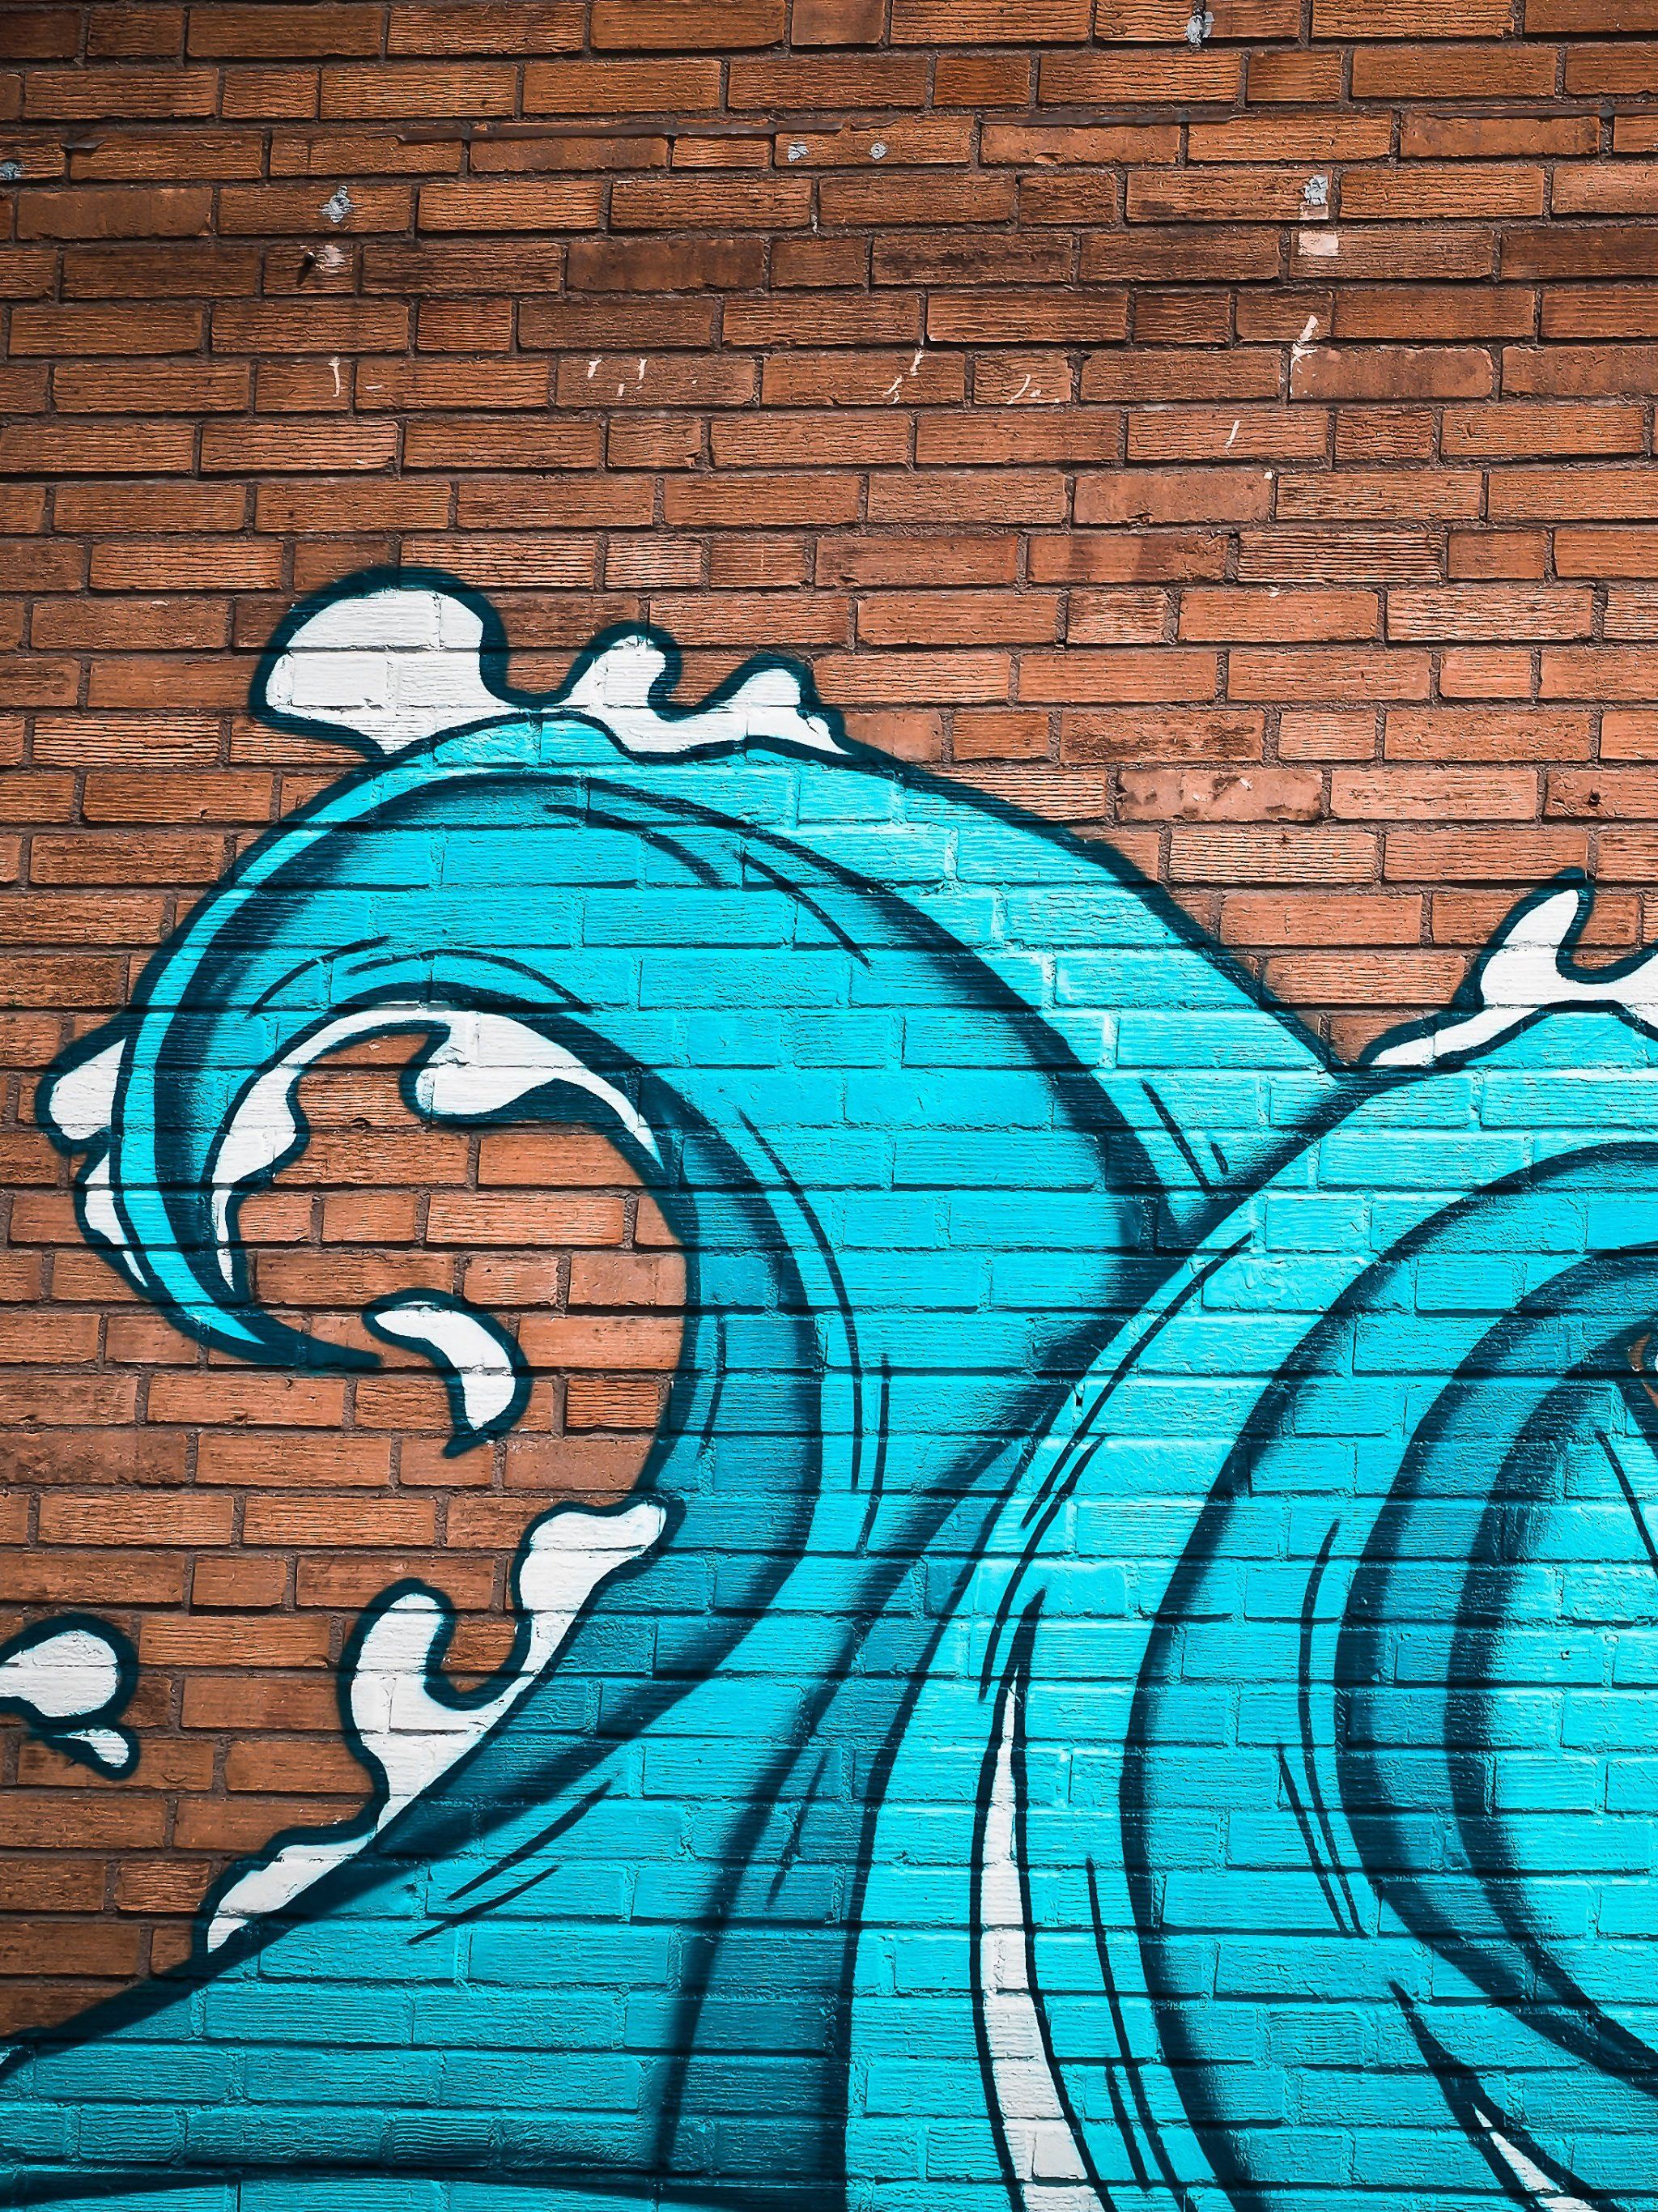 Ocean Waves Street Art Wallpaper, Android & Desktop Background